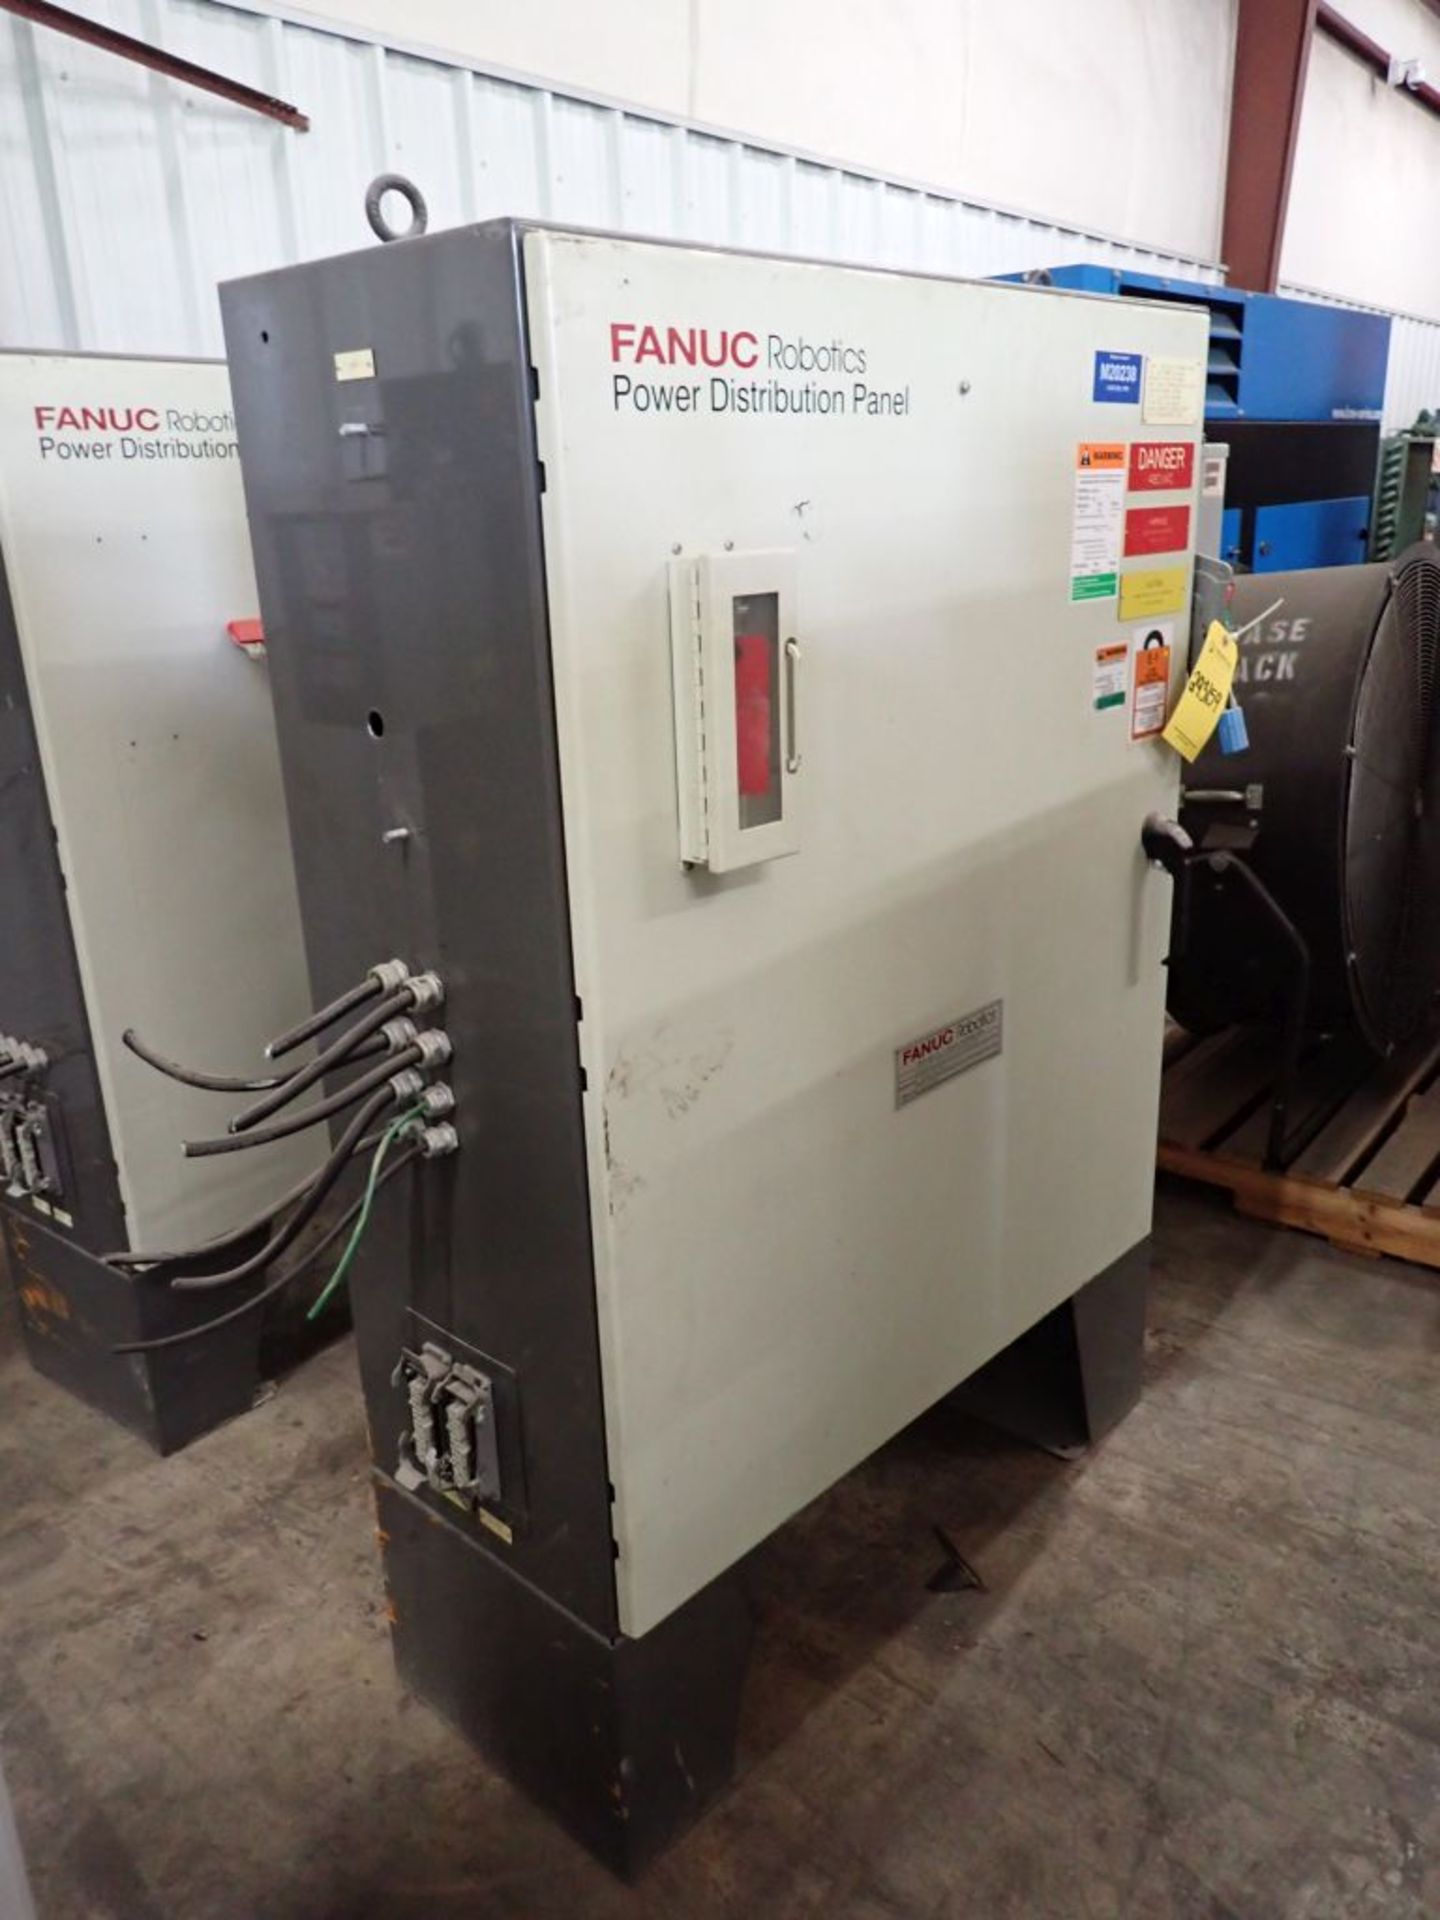 Fanuc Robotic Power Distribution Panel